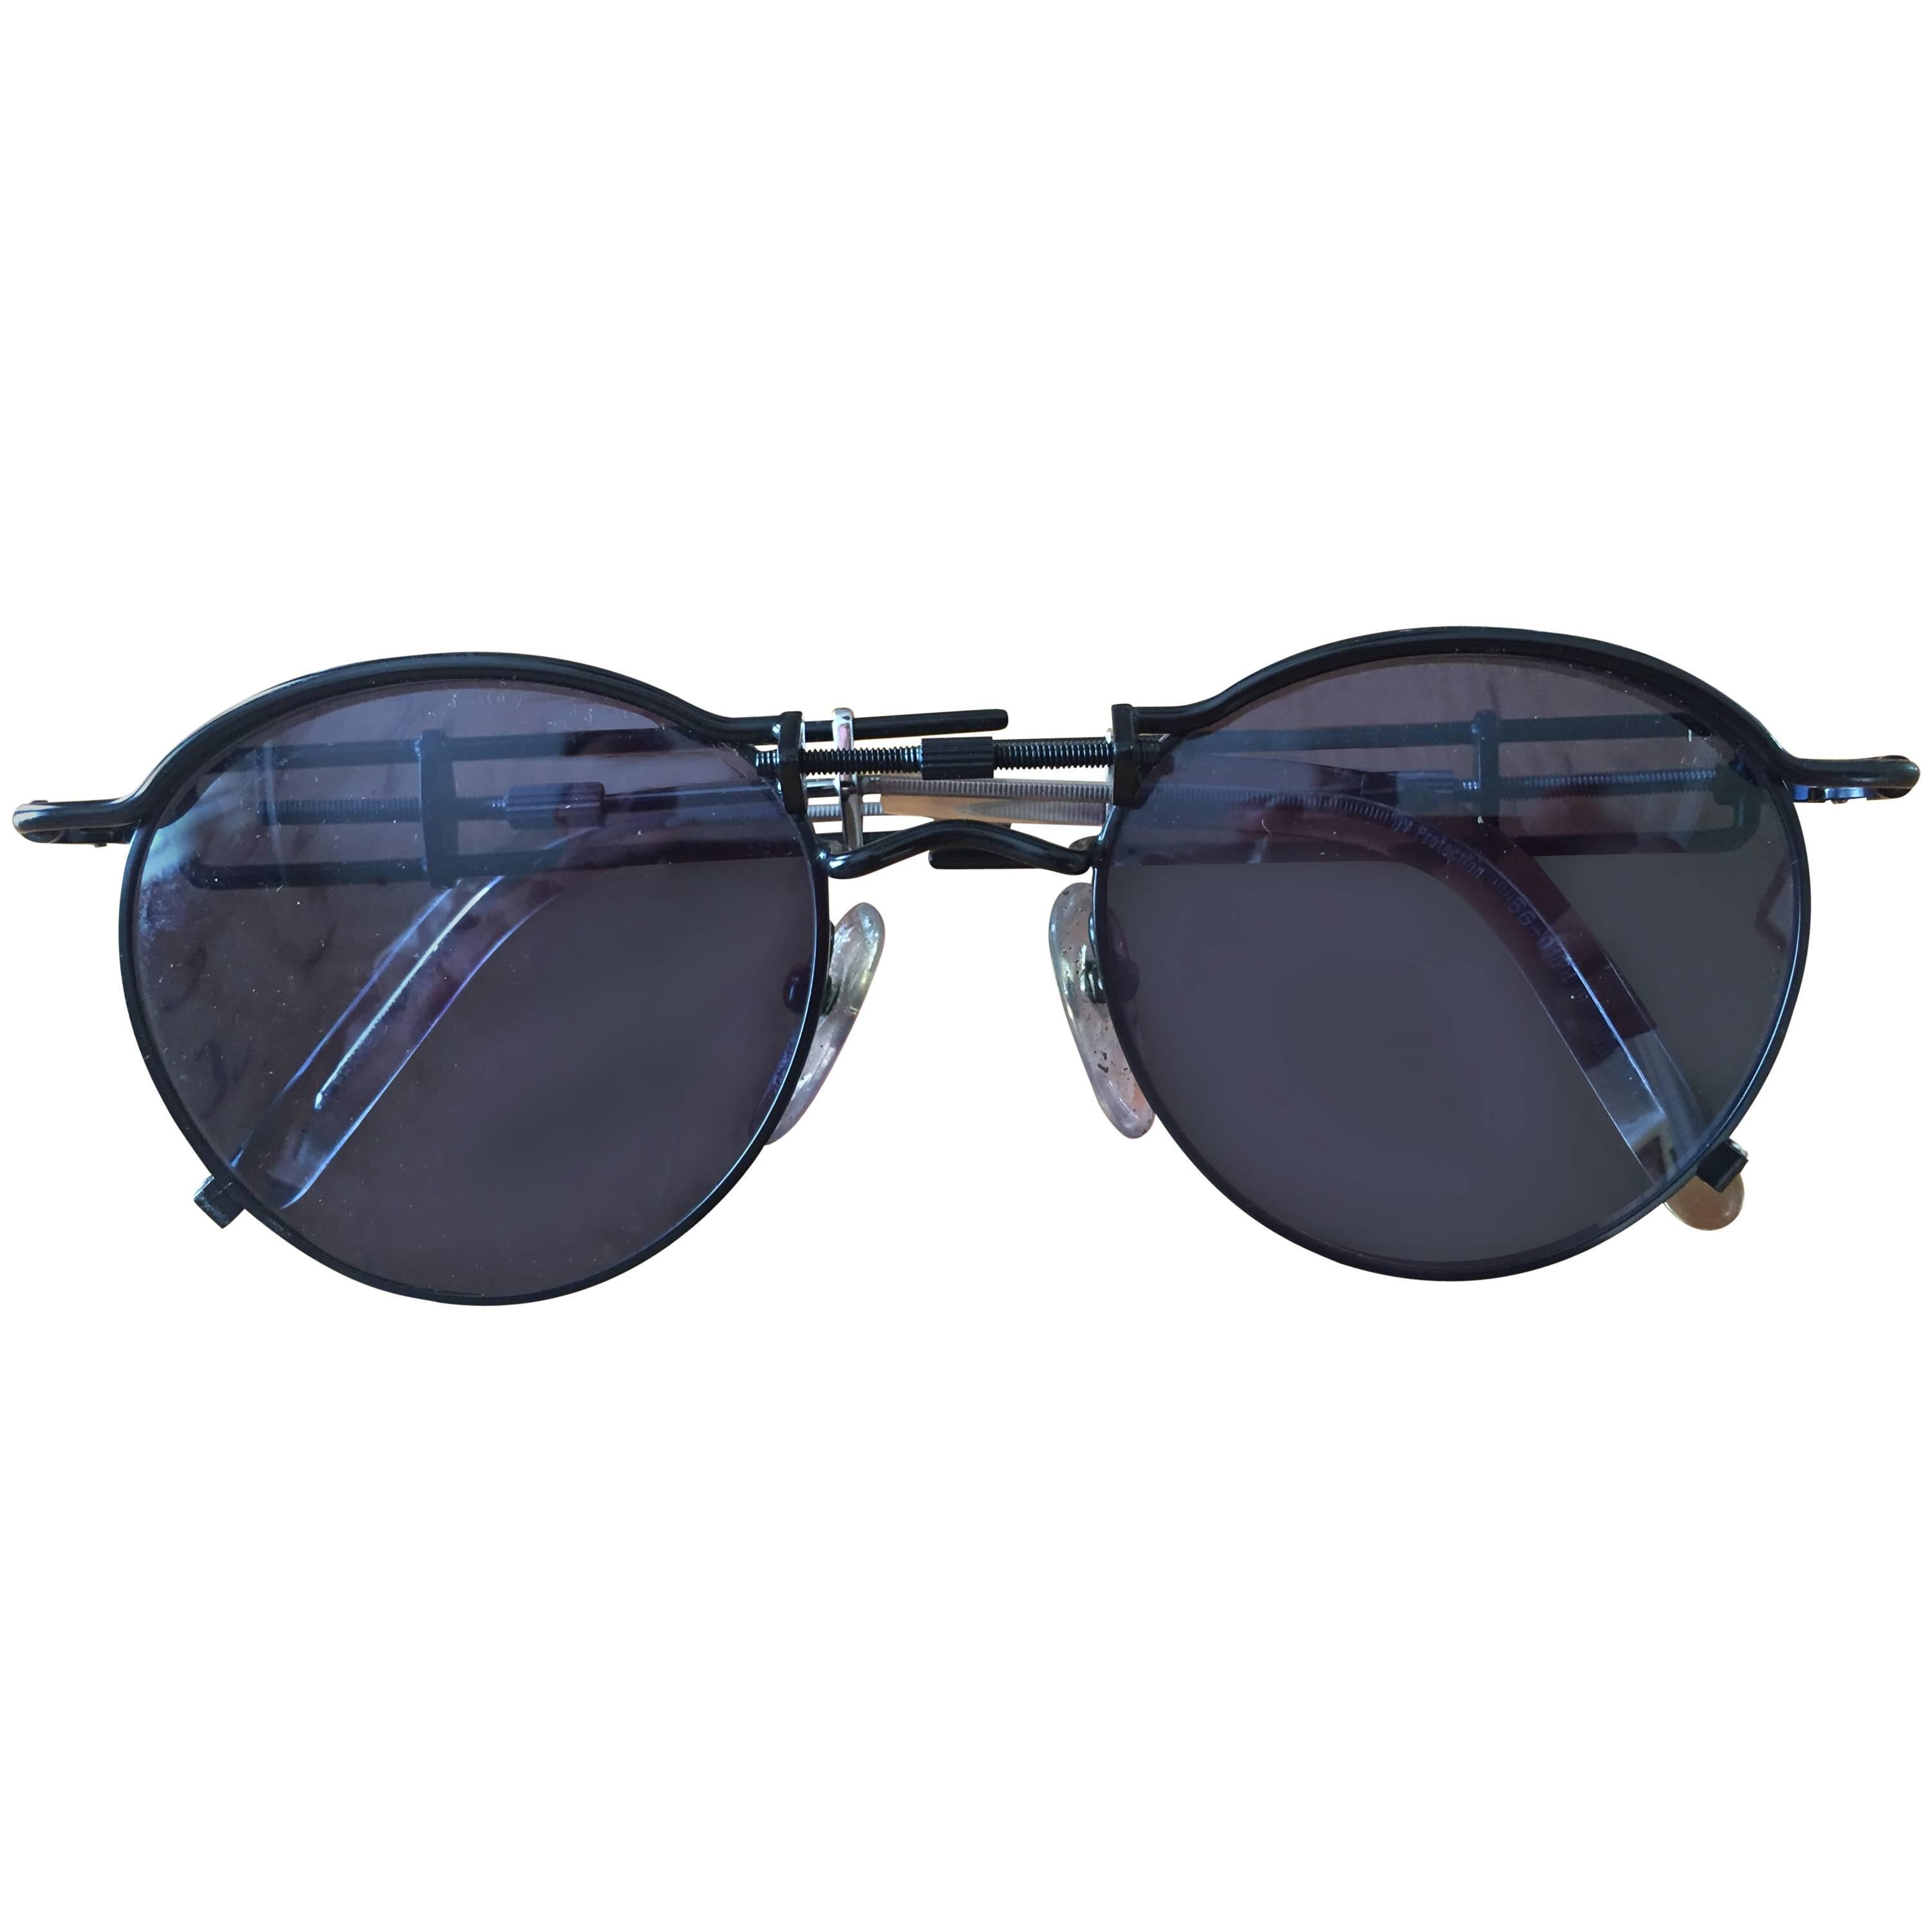 Jean Paul Gaultier Vintage Sunglasses Tupac Shakur at 1stDibs | jean paul  gaultier glasses tupac, tupac sunglasses, jean paul gaultier tupac glasses